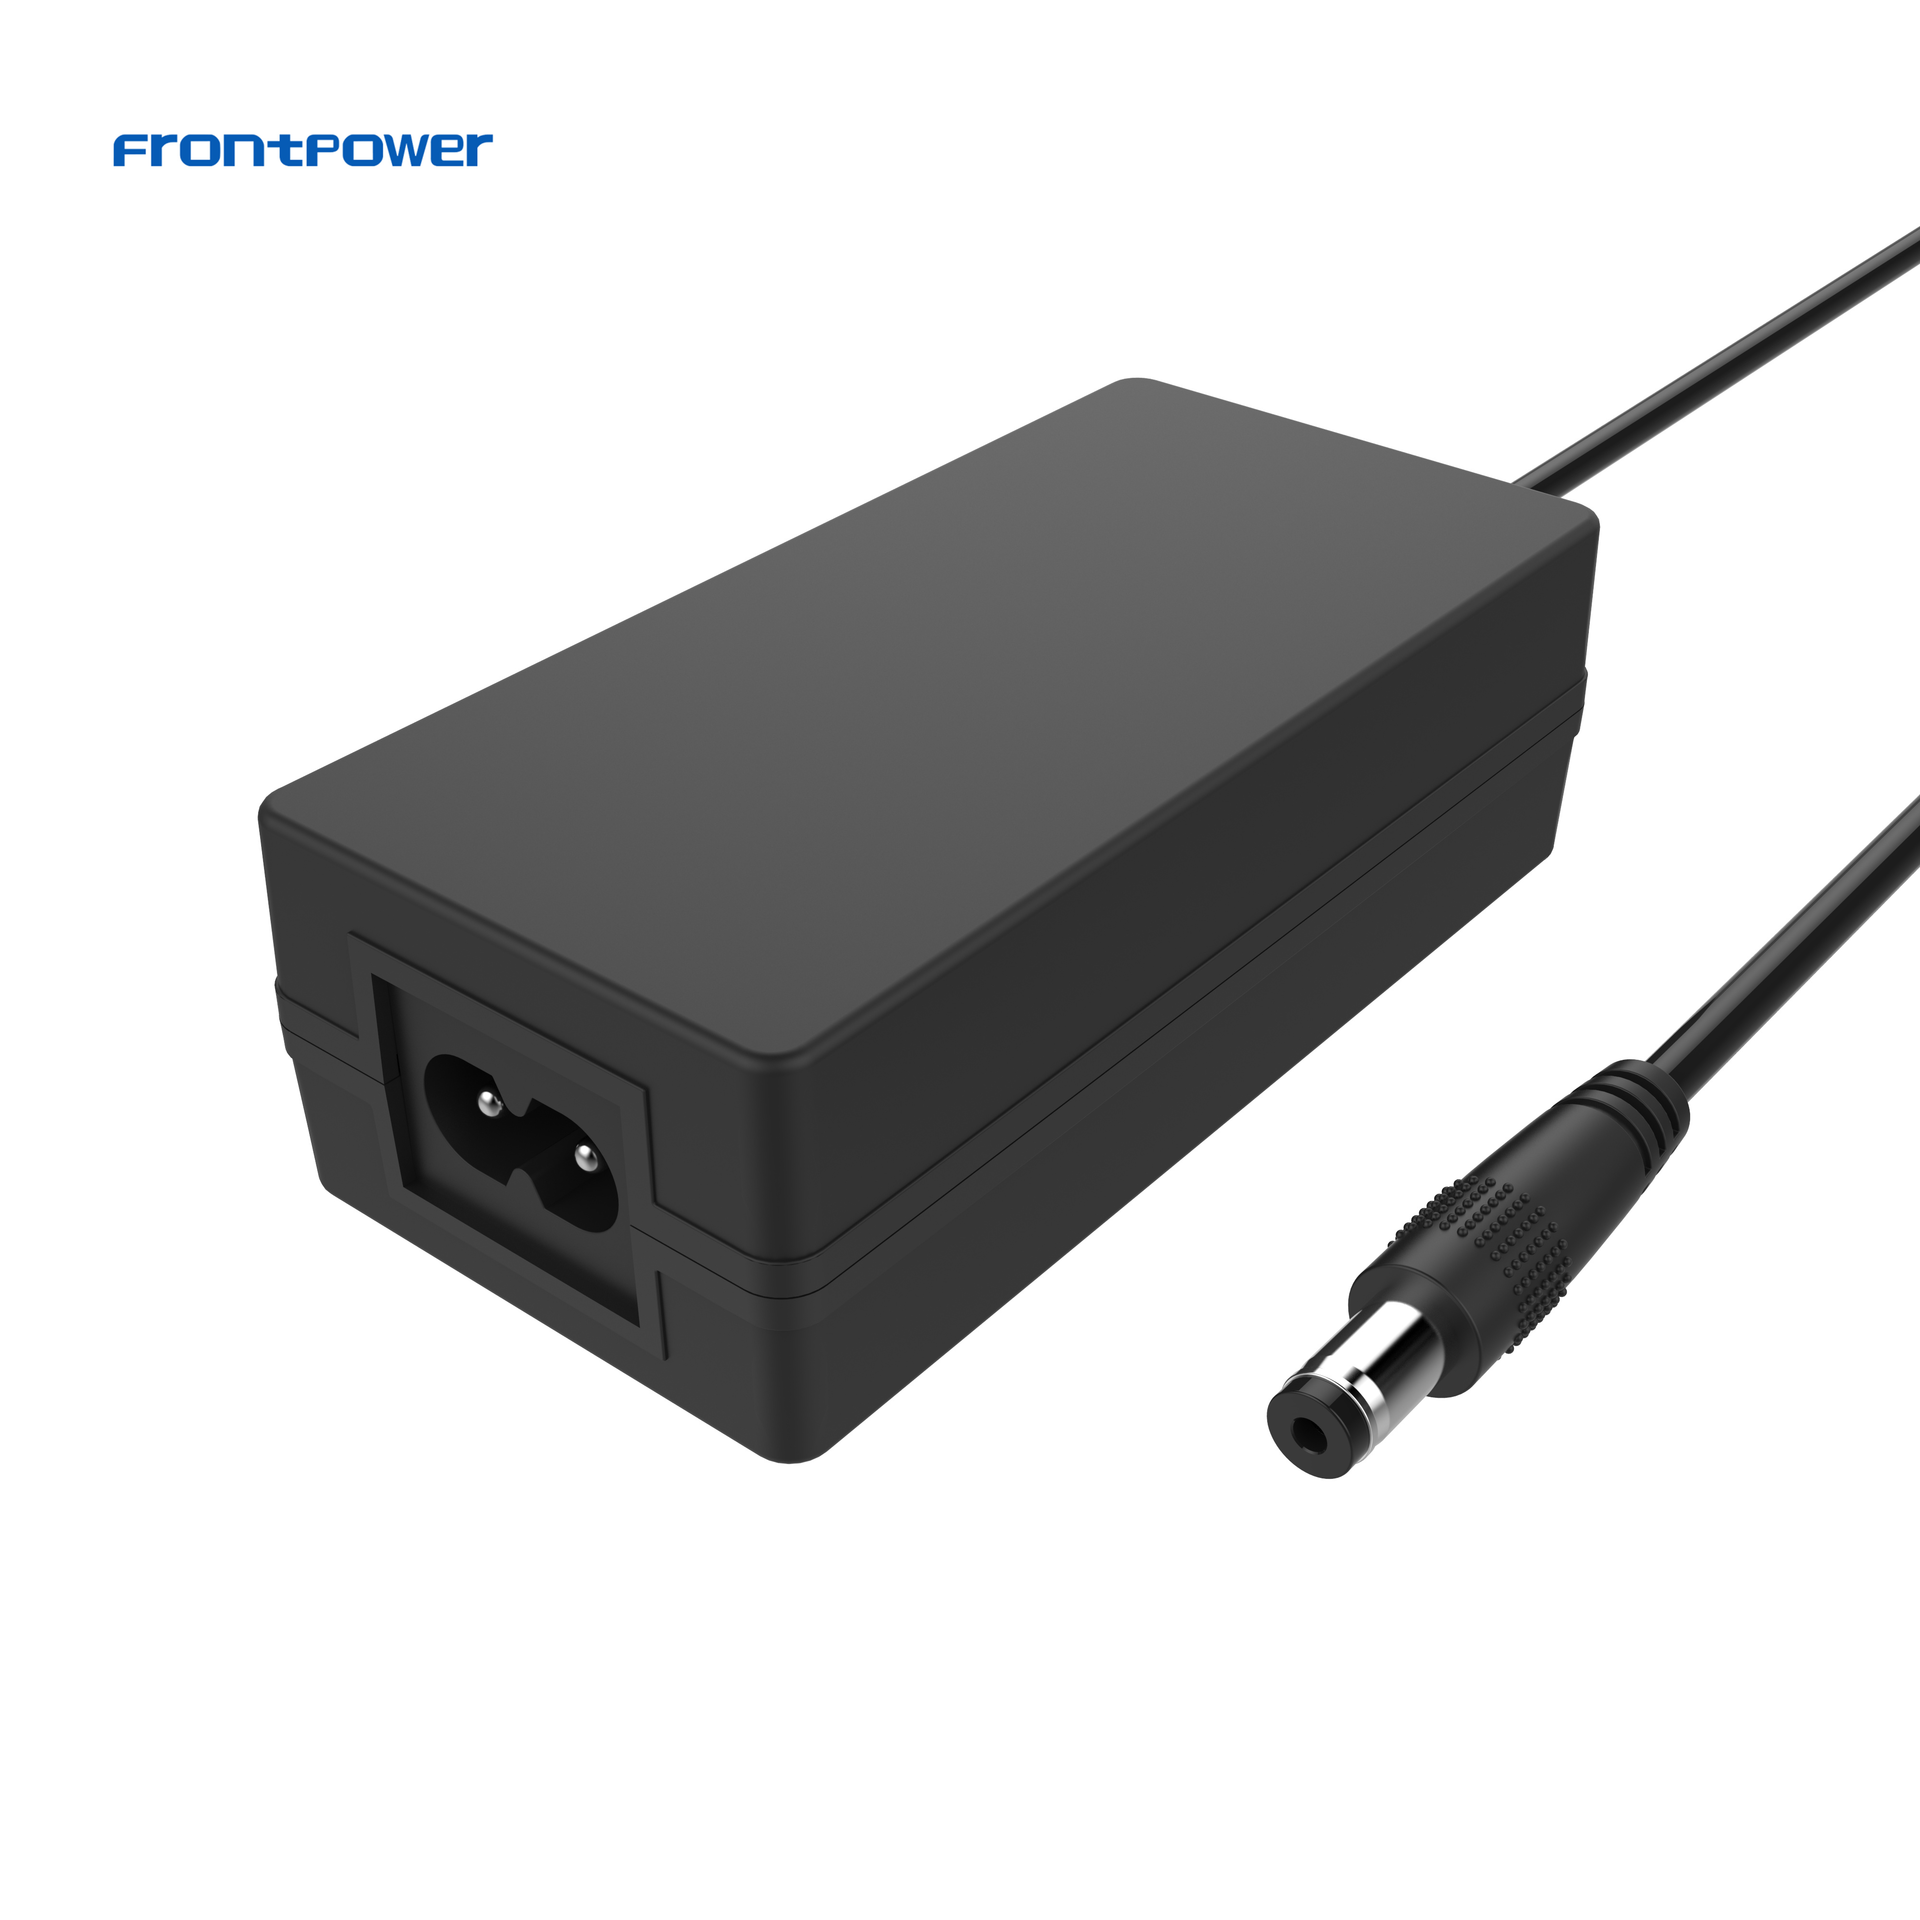 Frontpower 5v 3.5a black white desktop type power adaptor with EN62368/61558/60601 for laptop